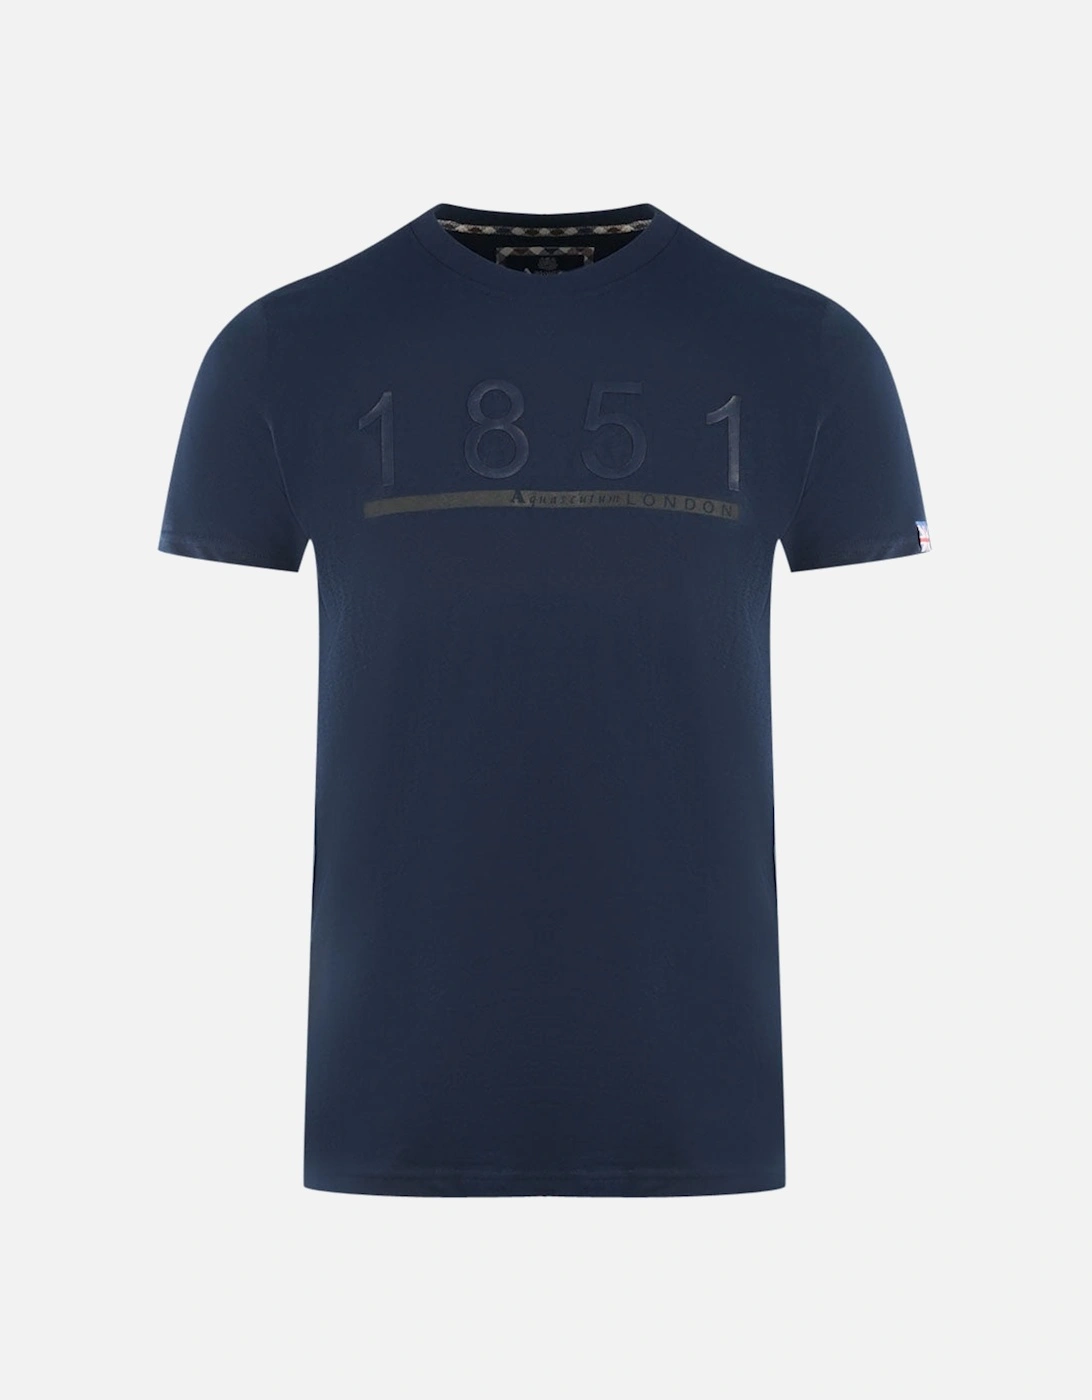 London 1851 Navy Blue T-Shirt, 3 of 2